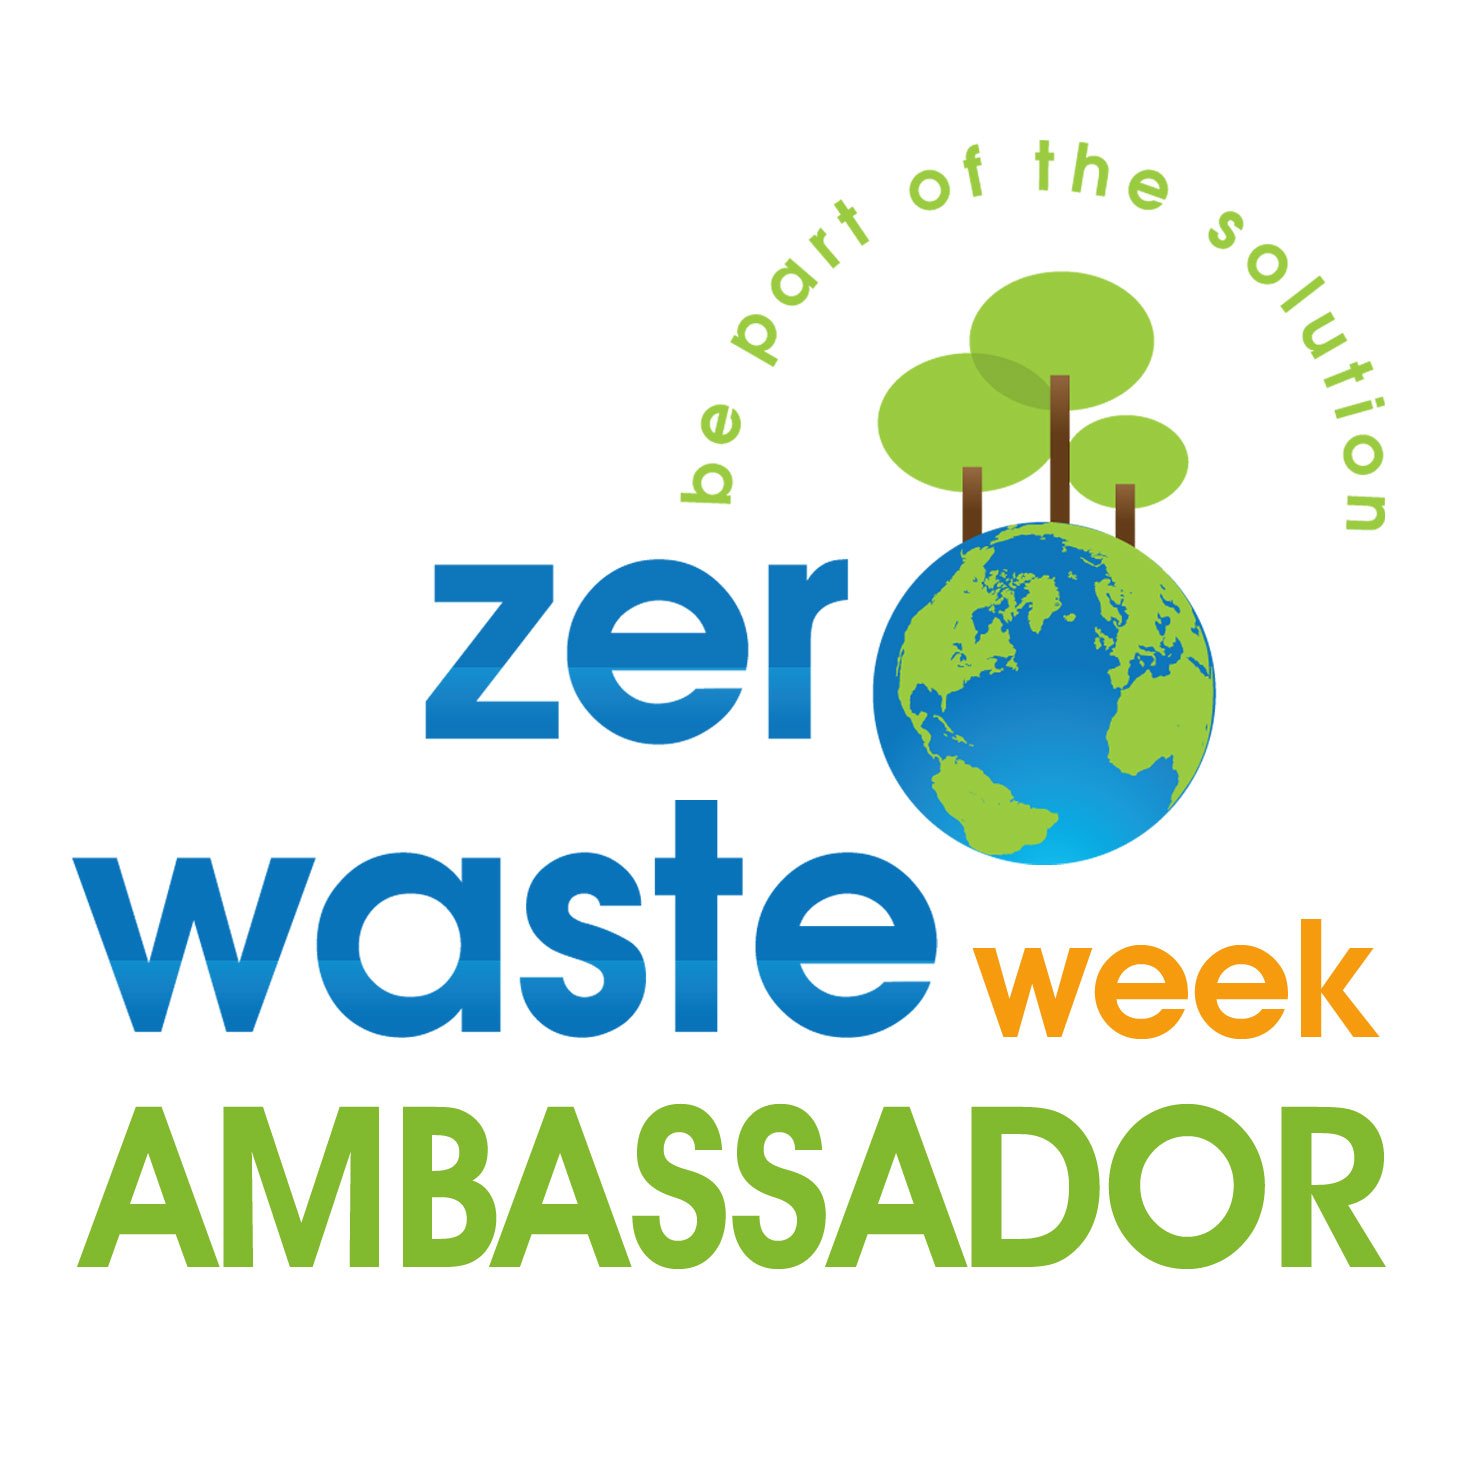 Zero Waste Week Ambassador logo